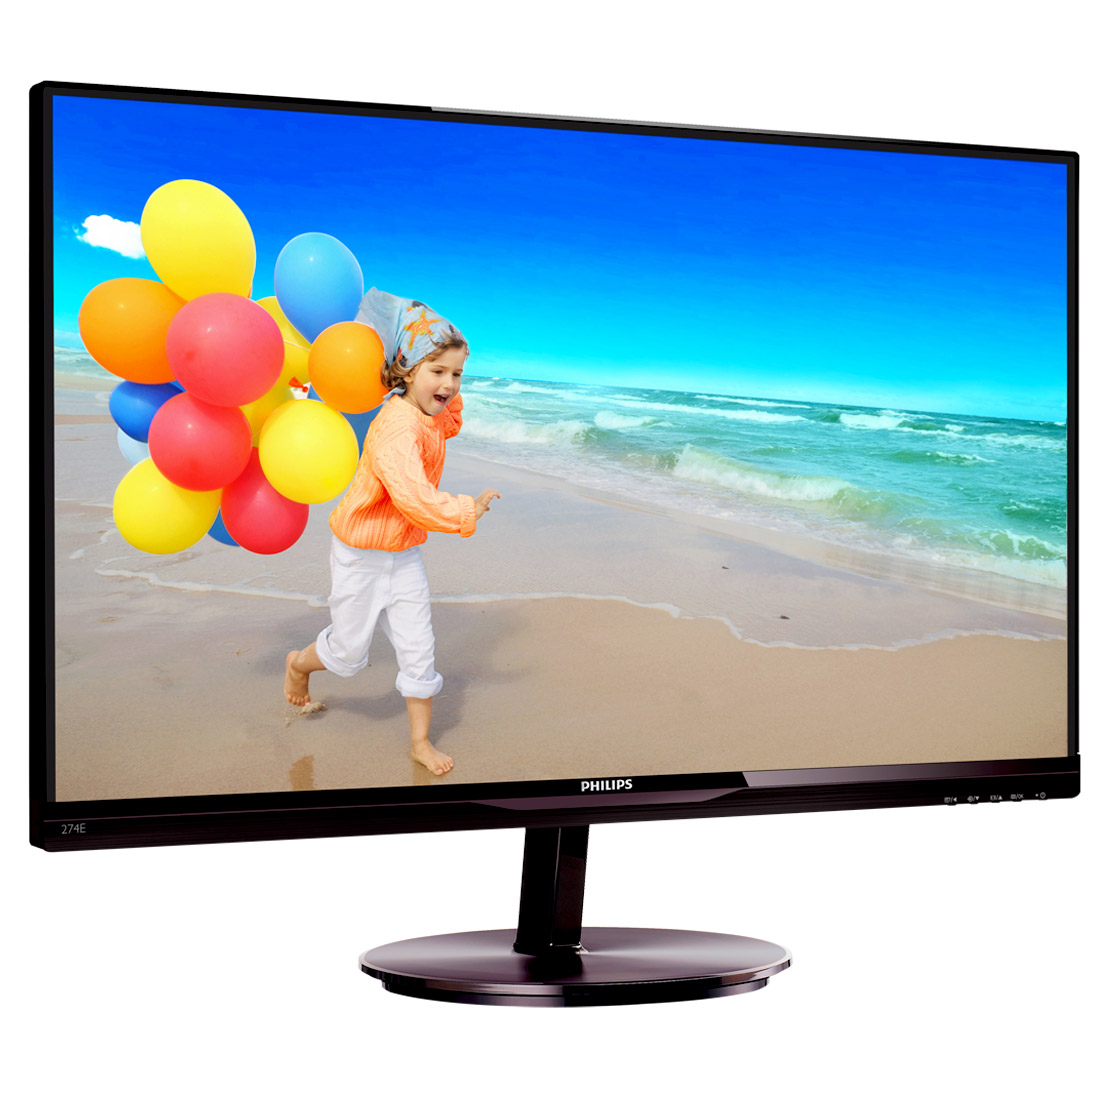 Monitor LCD 21.5, Widescreen, HDMI, HDCP - 224E5QHAB - Philips